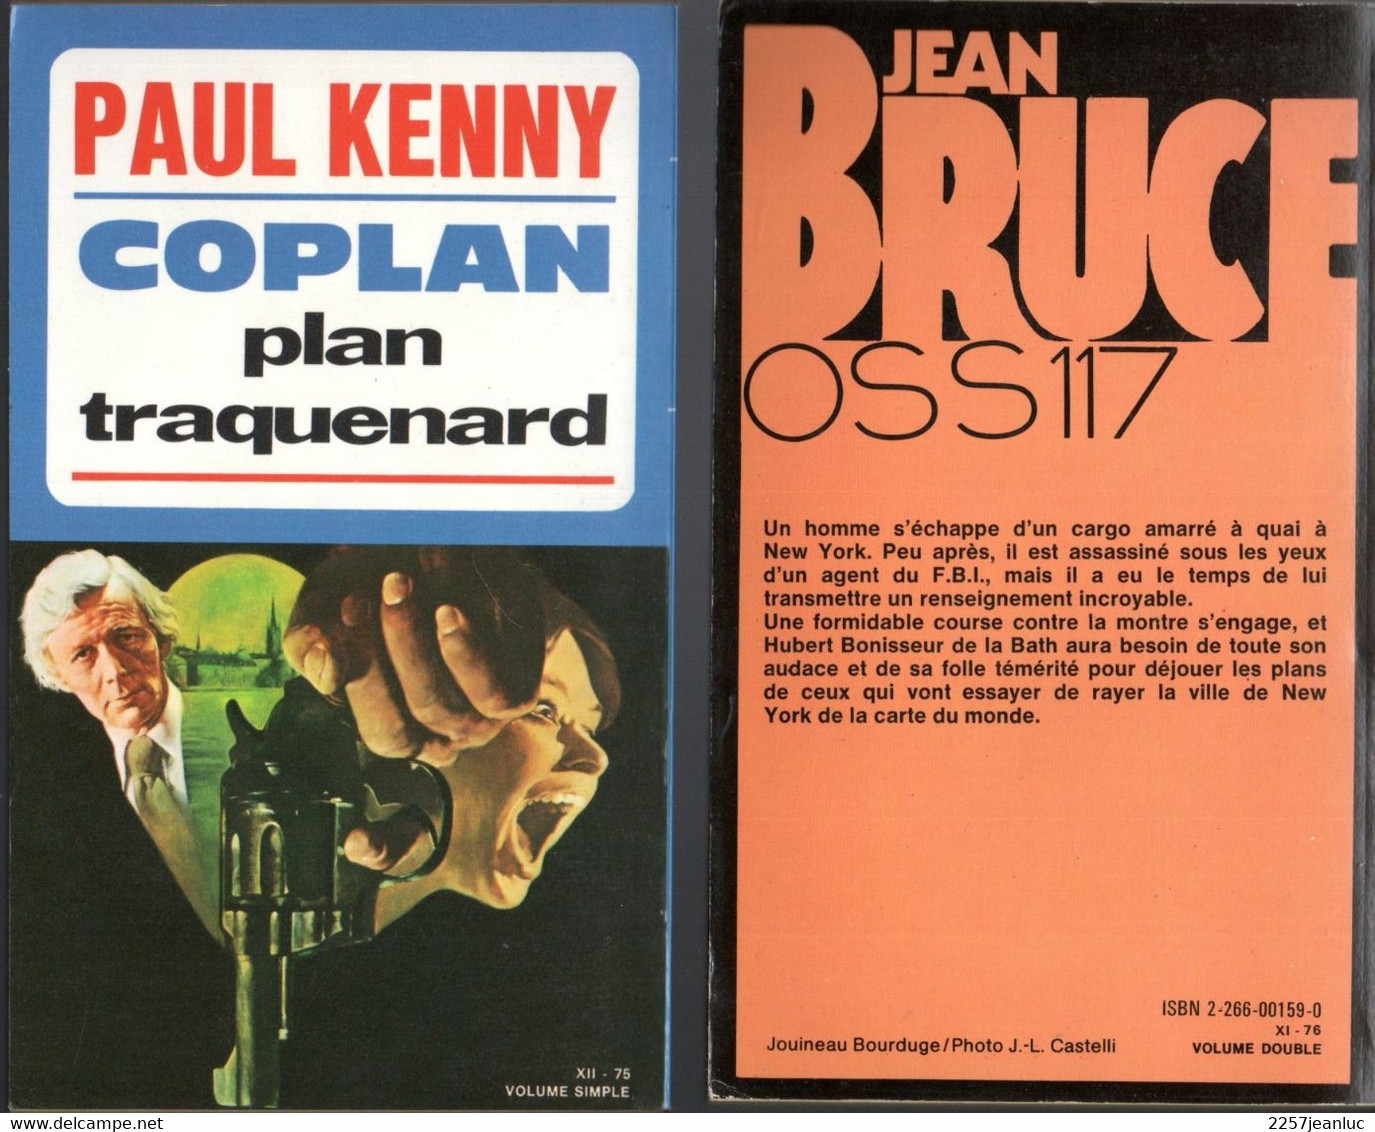 Lot 2 Romans   - Bruce OSS 117 Contact Impossible  & Colpan Plan Traquenard Editions Presses Poket 1967 Et 1975 - Presses Pocket